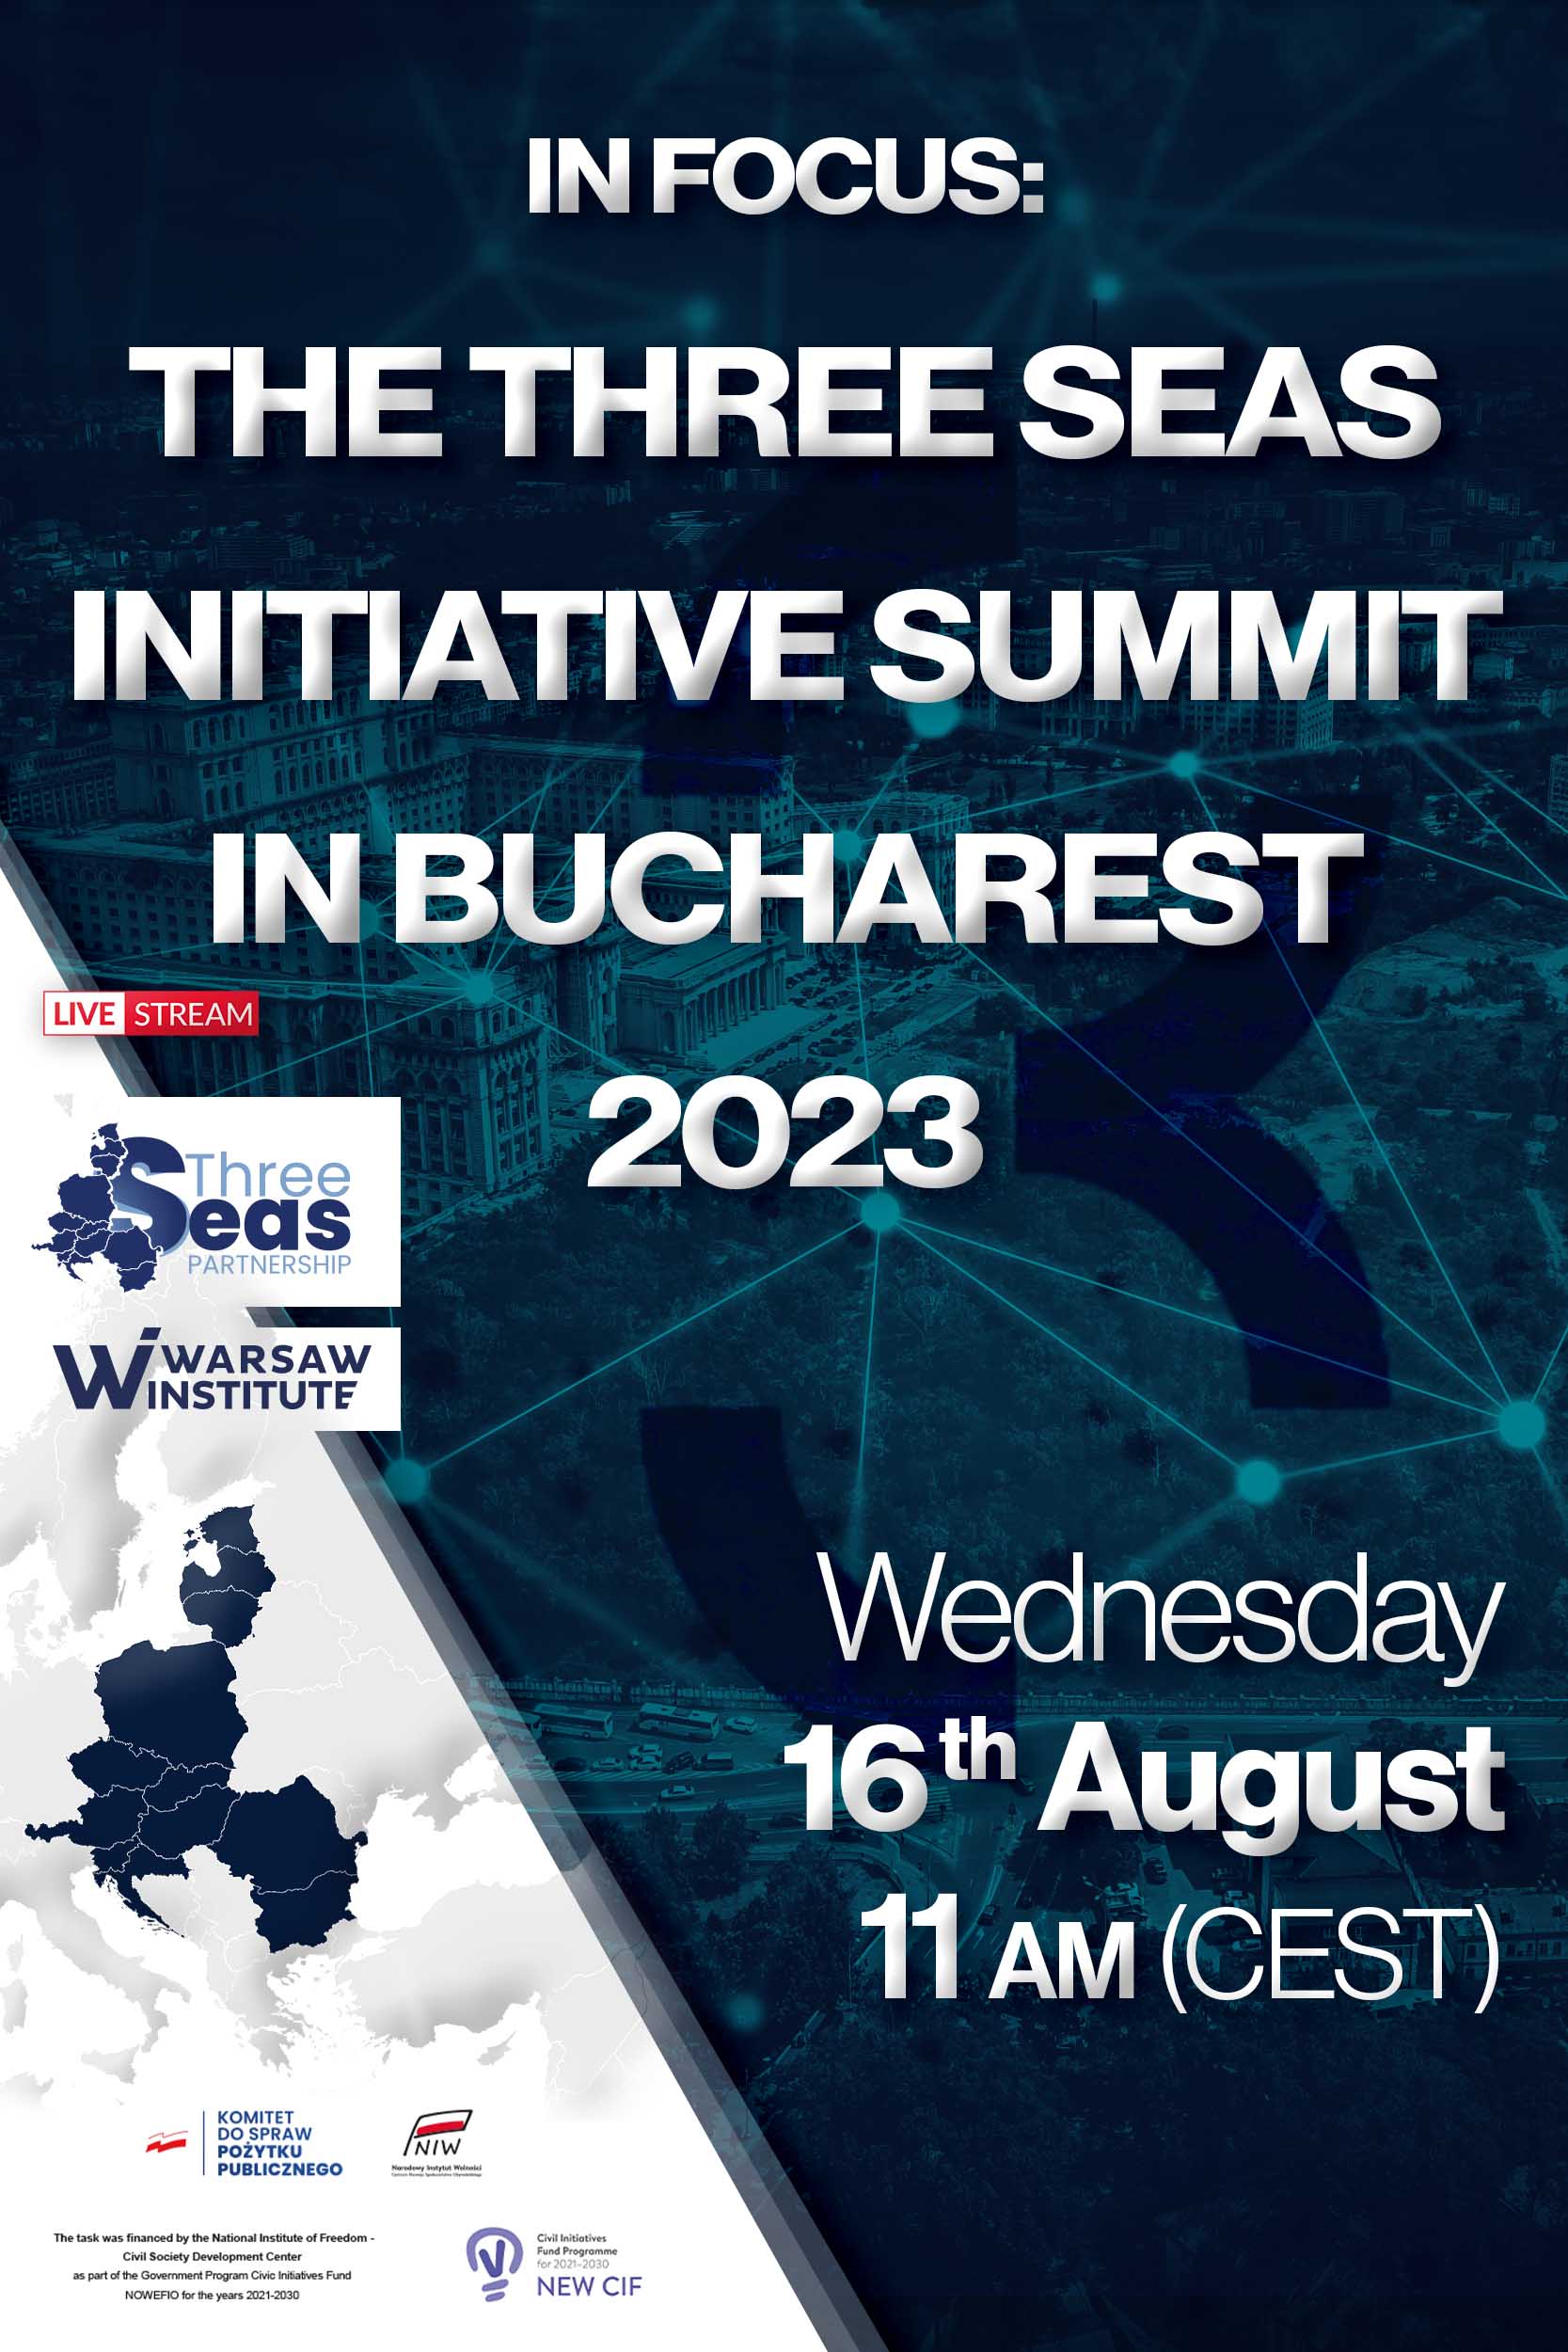 The Three Seas Initiative Summit in Bucharest 2023